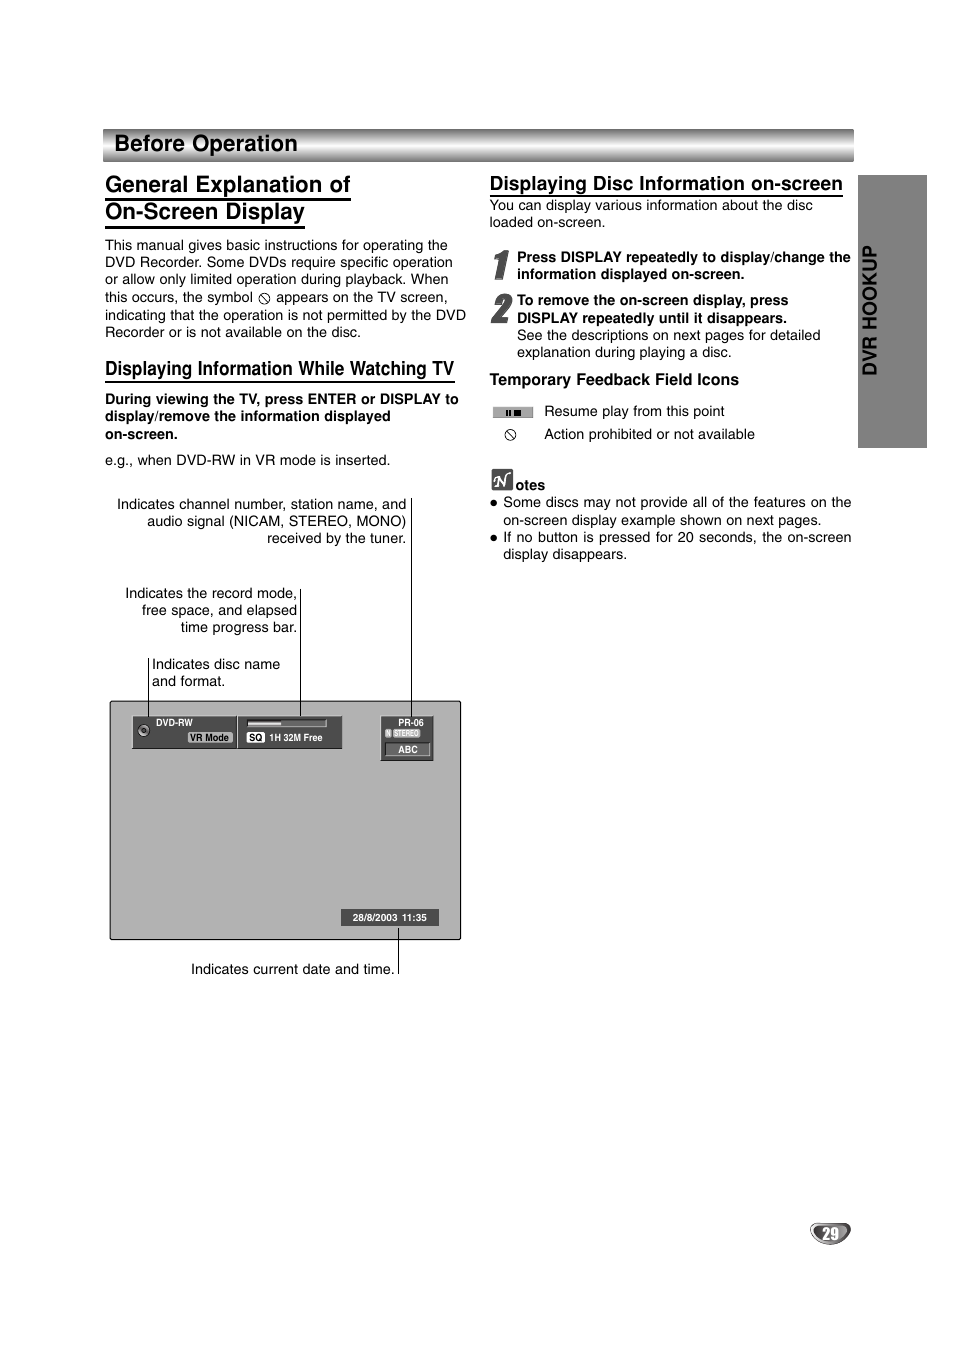 Dvr hookup, Displaying information while watching tv, Displaying disc information on-screen | LG DR4912 User Manual | Page 29 / 64